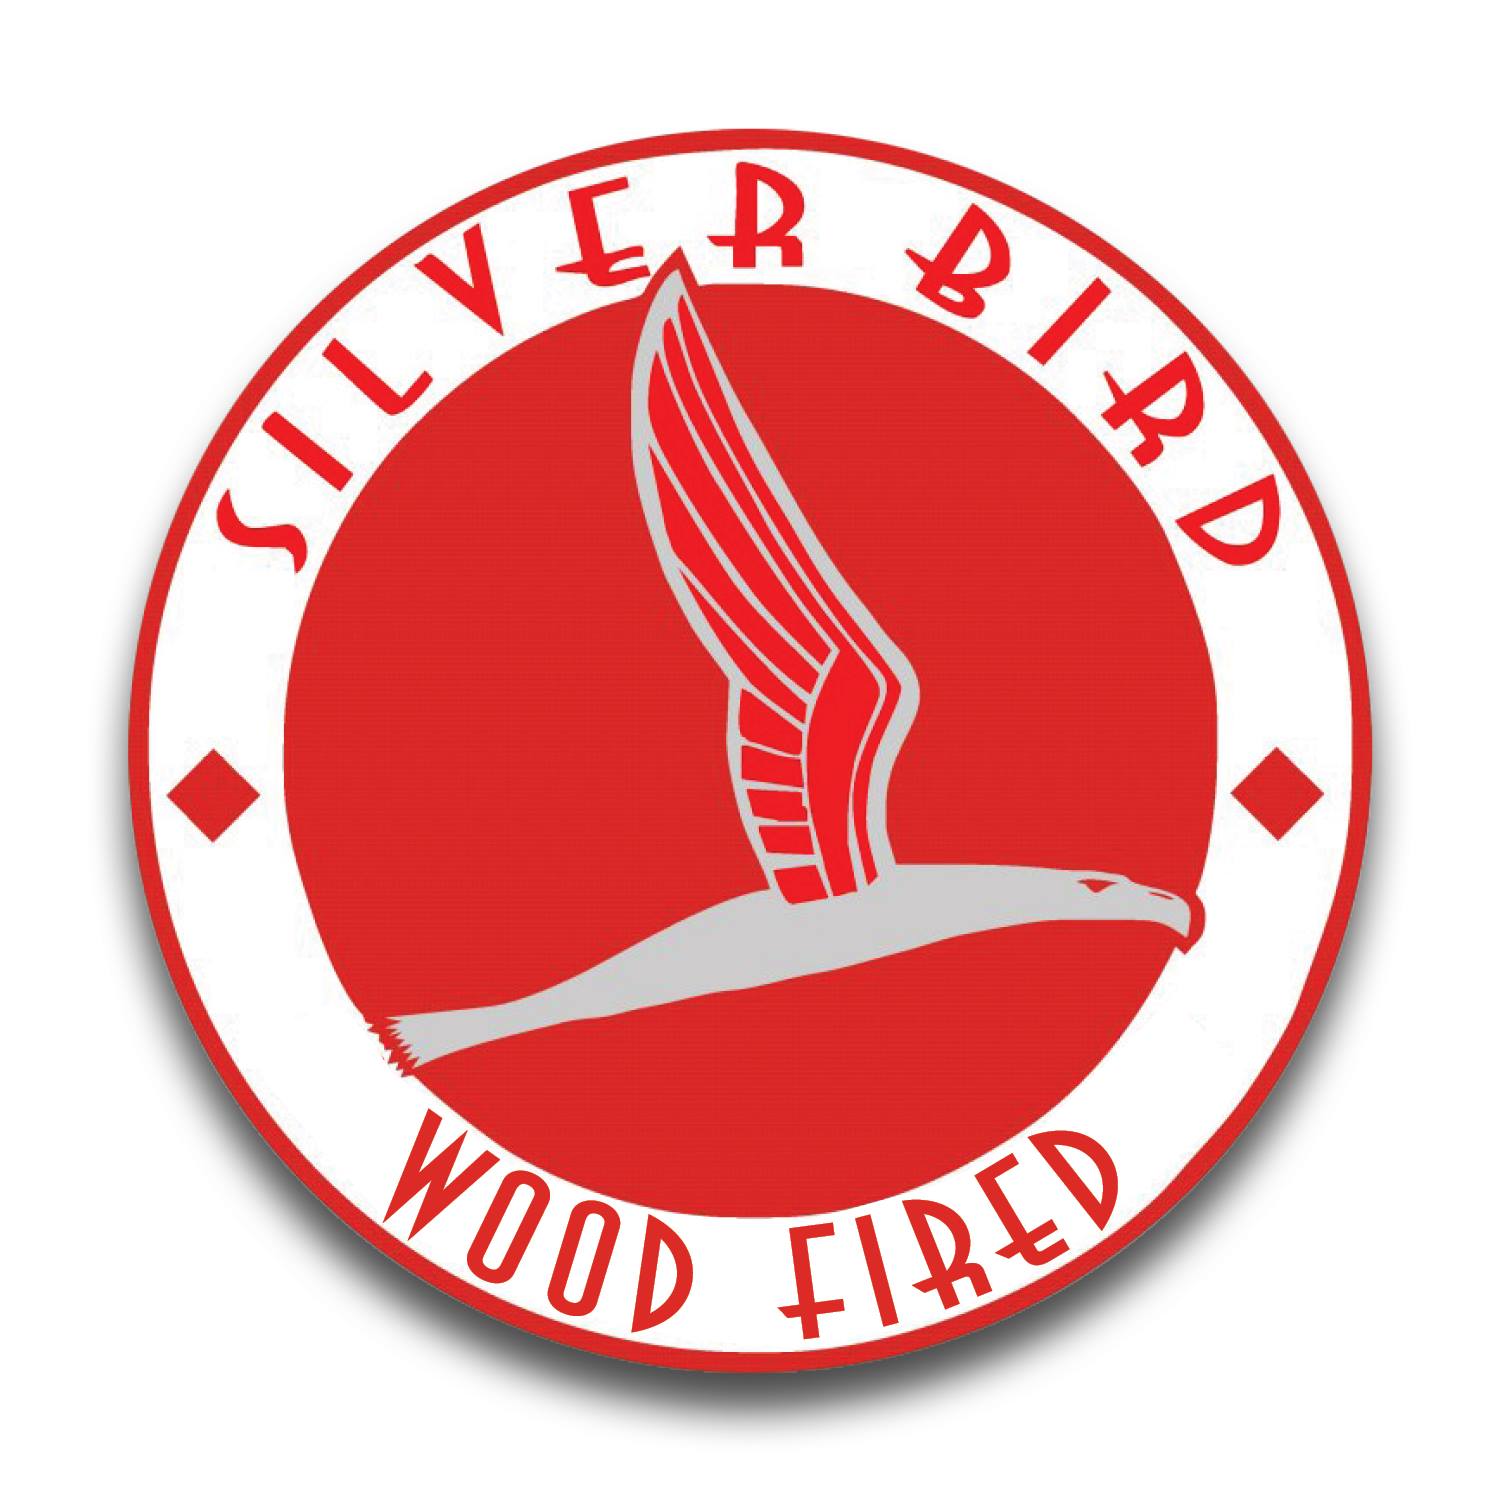 silverbird woodfired.jpg